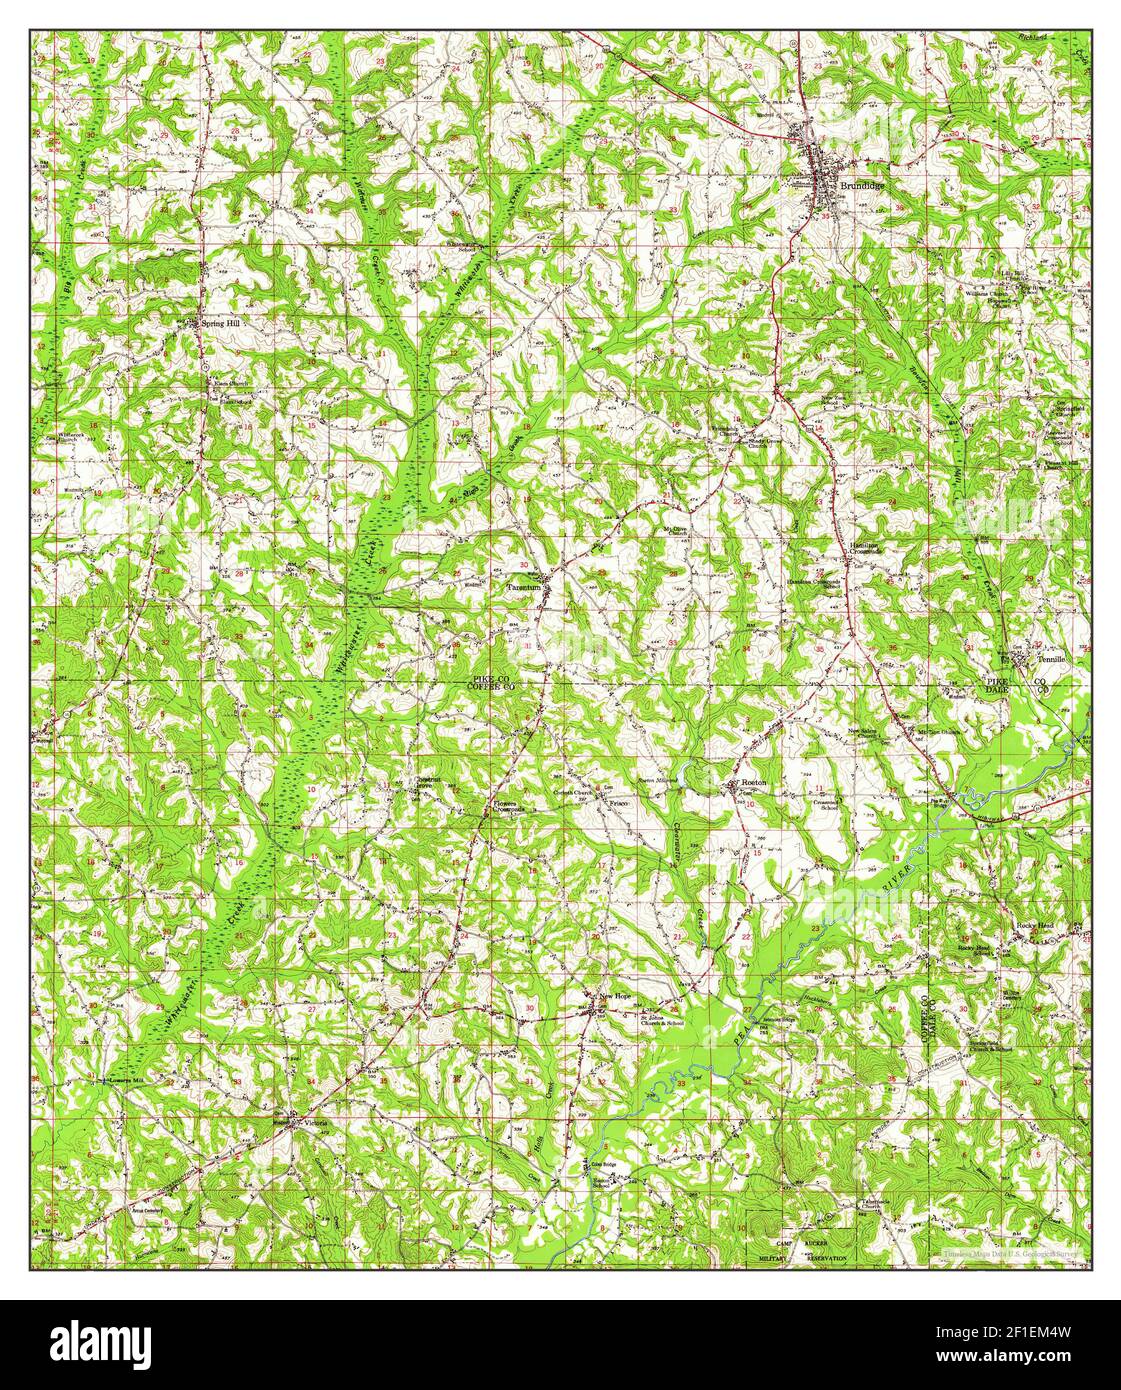 Brundidge, Alabama, map 1950, 1:62500, United States of America by Timeless Maps, data U.S. Geological Survey Stock Photo